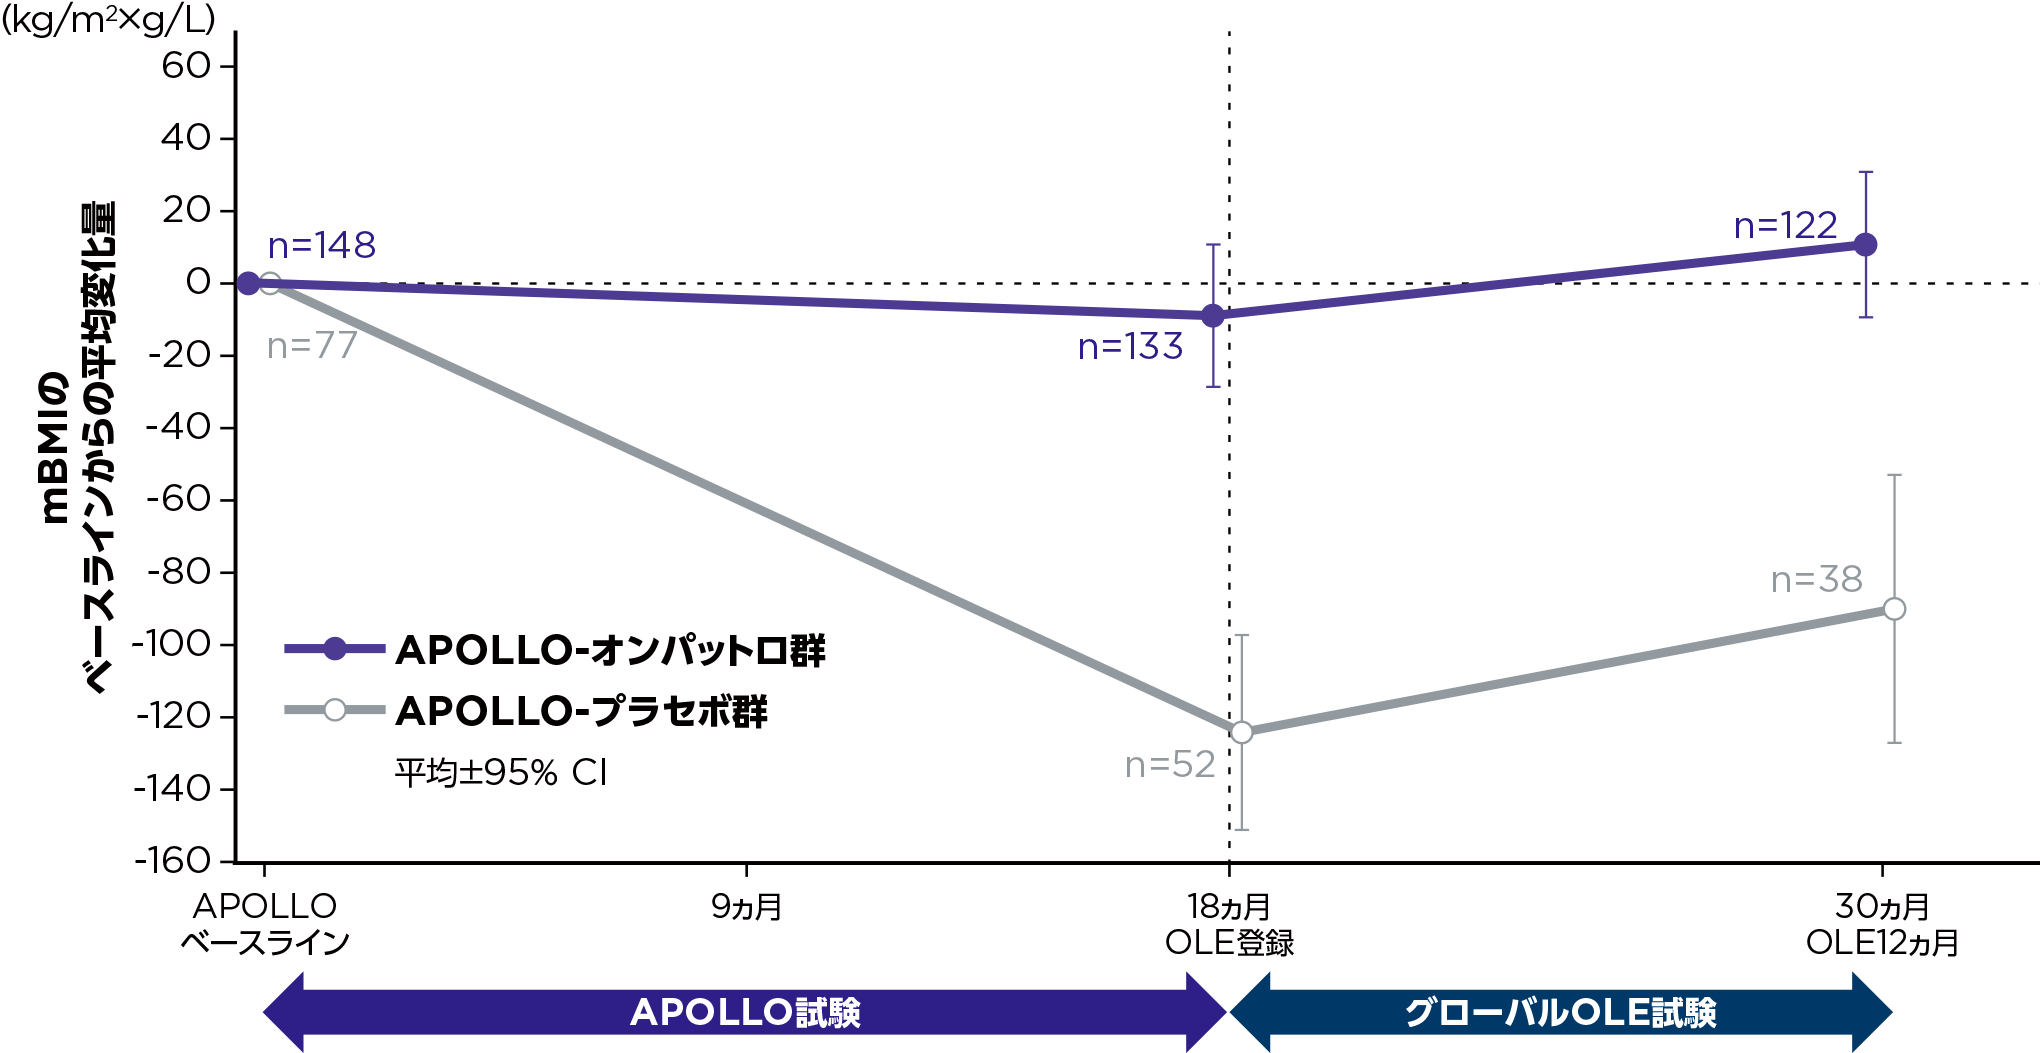 mBMIのベースラインからの変化量の推移(FAS) - APOLLO-オンパットロ群およびAPOLLO-プラセボ群